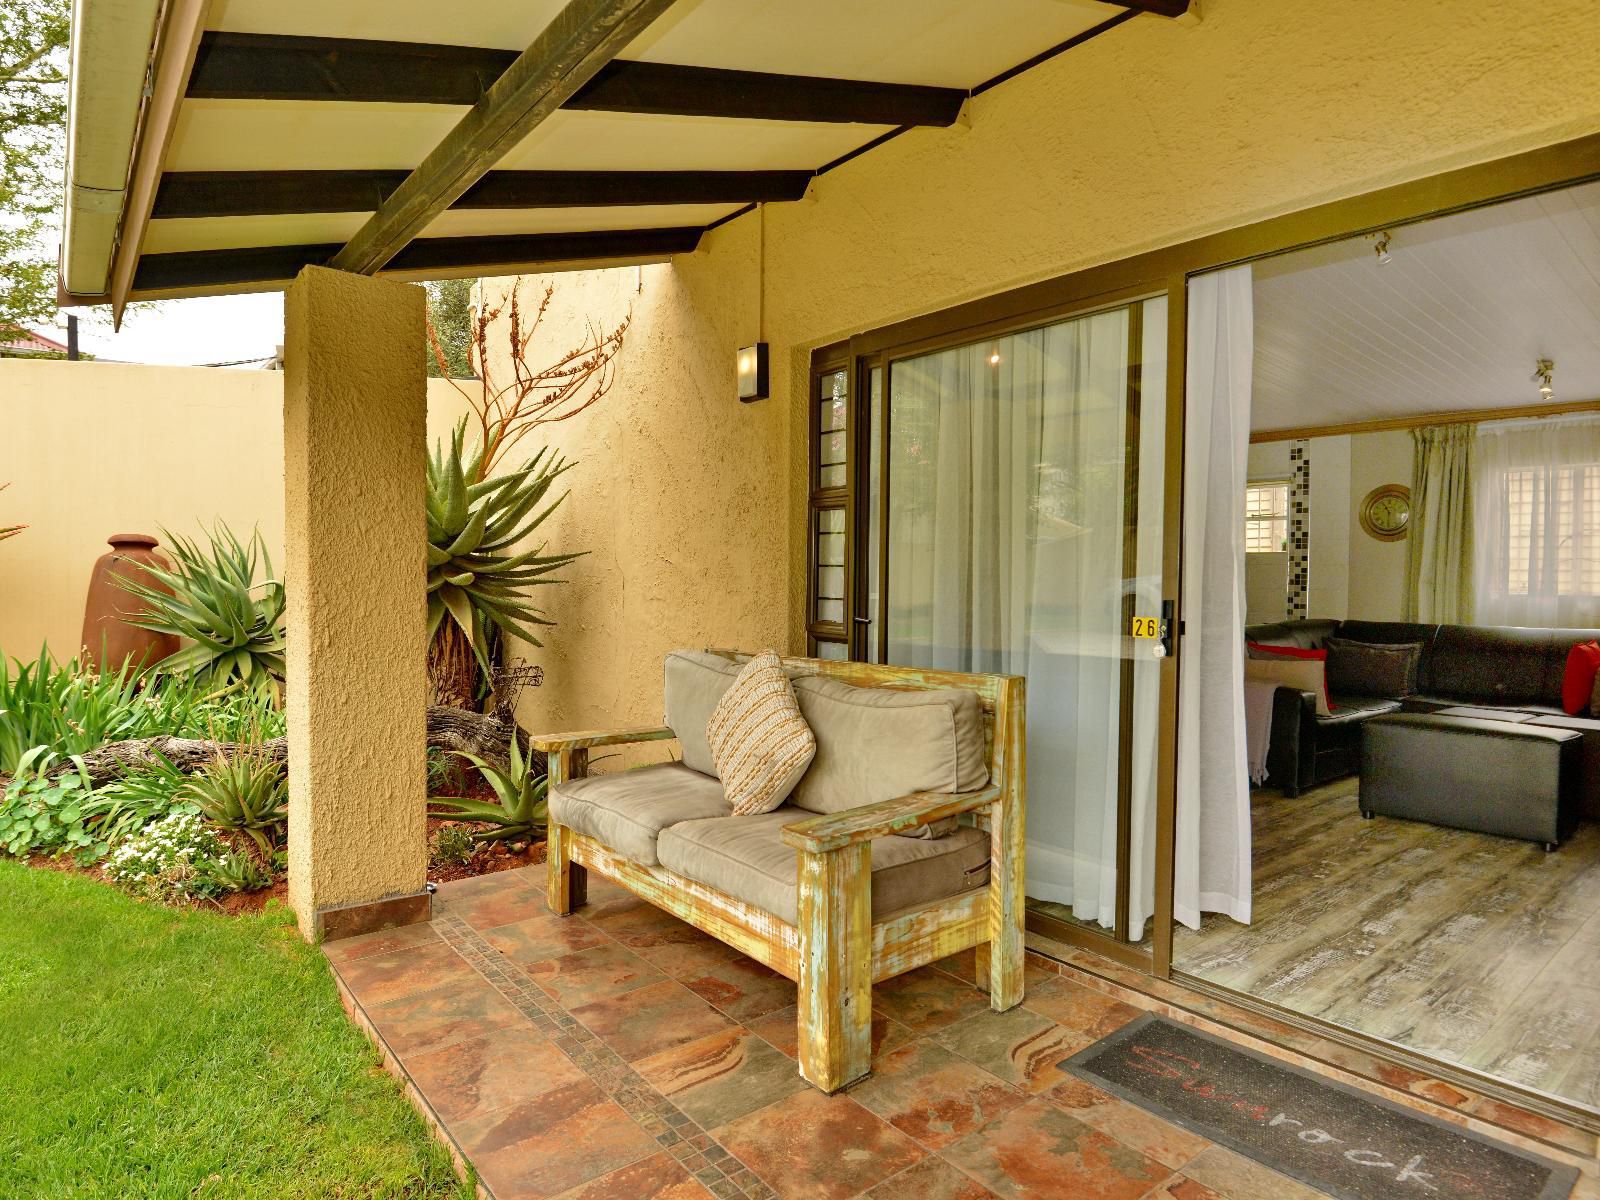 Sunrock Guesthouse Kempton Park Johannesburg Gauteng South Africa Palm Tree, Plant, Nature, Wood, Living Room